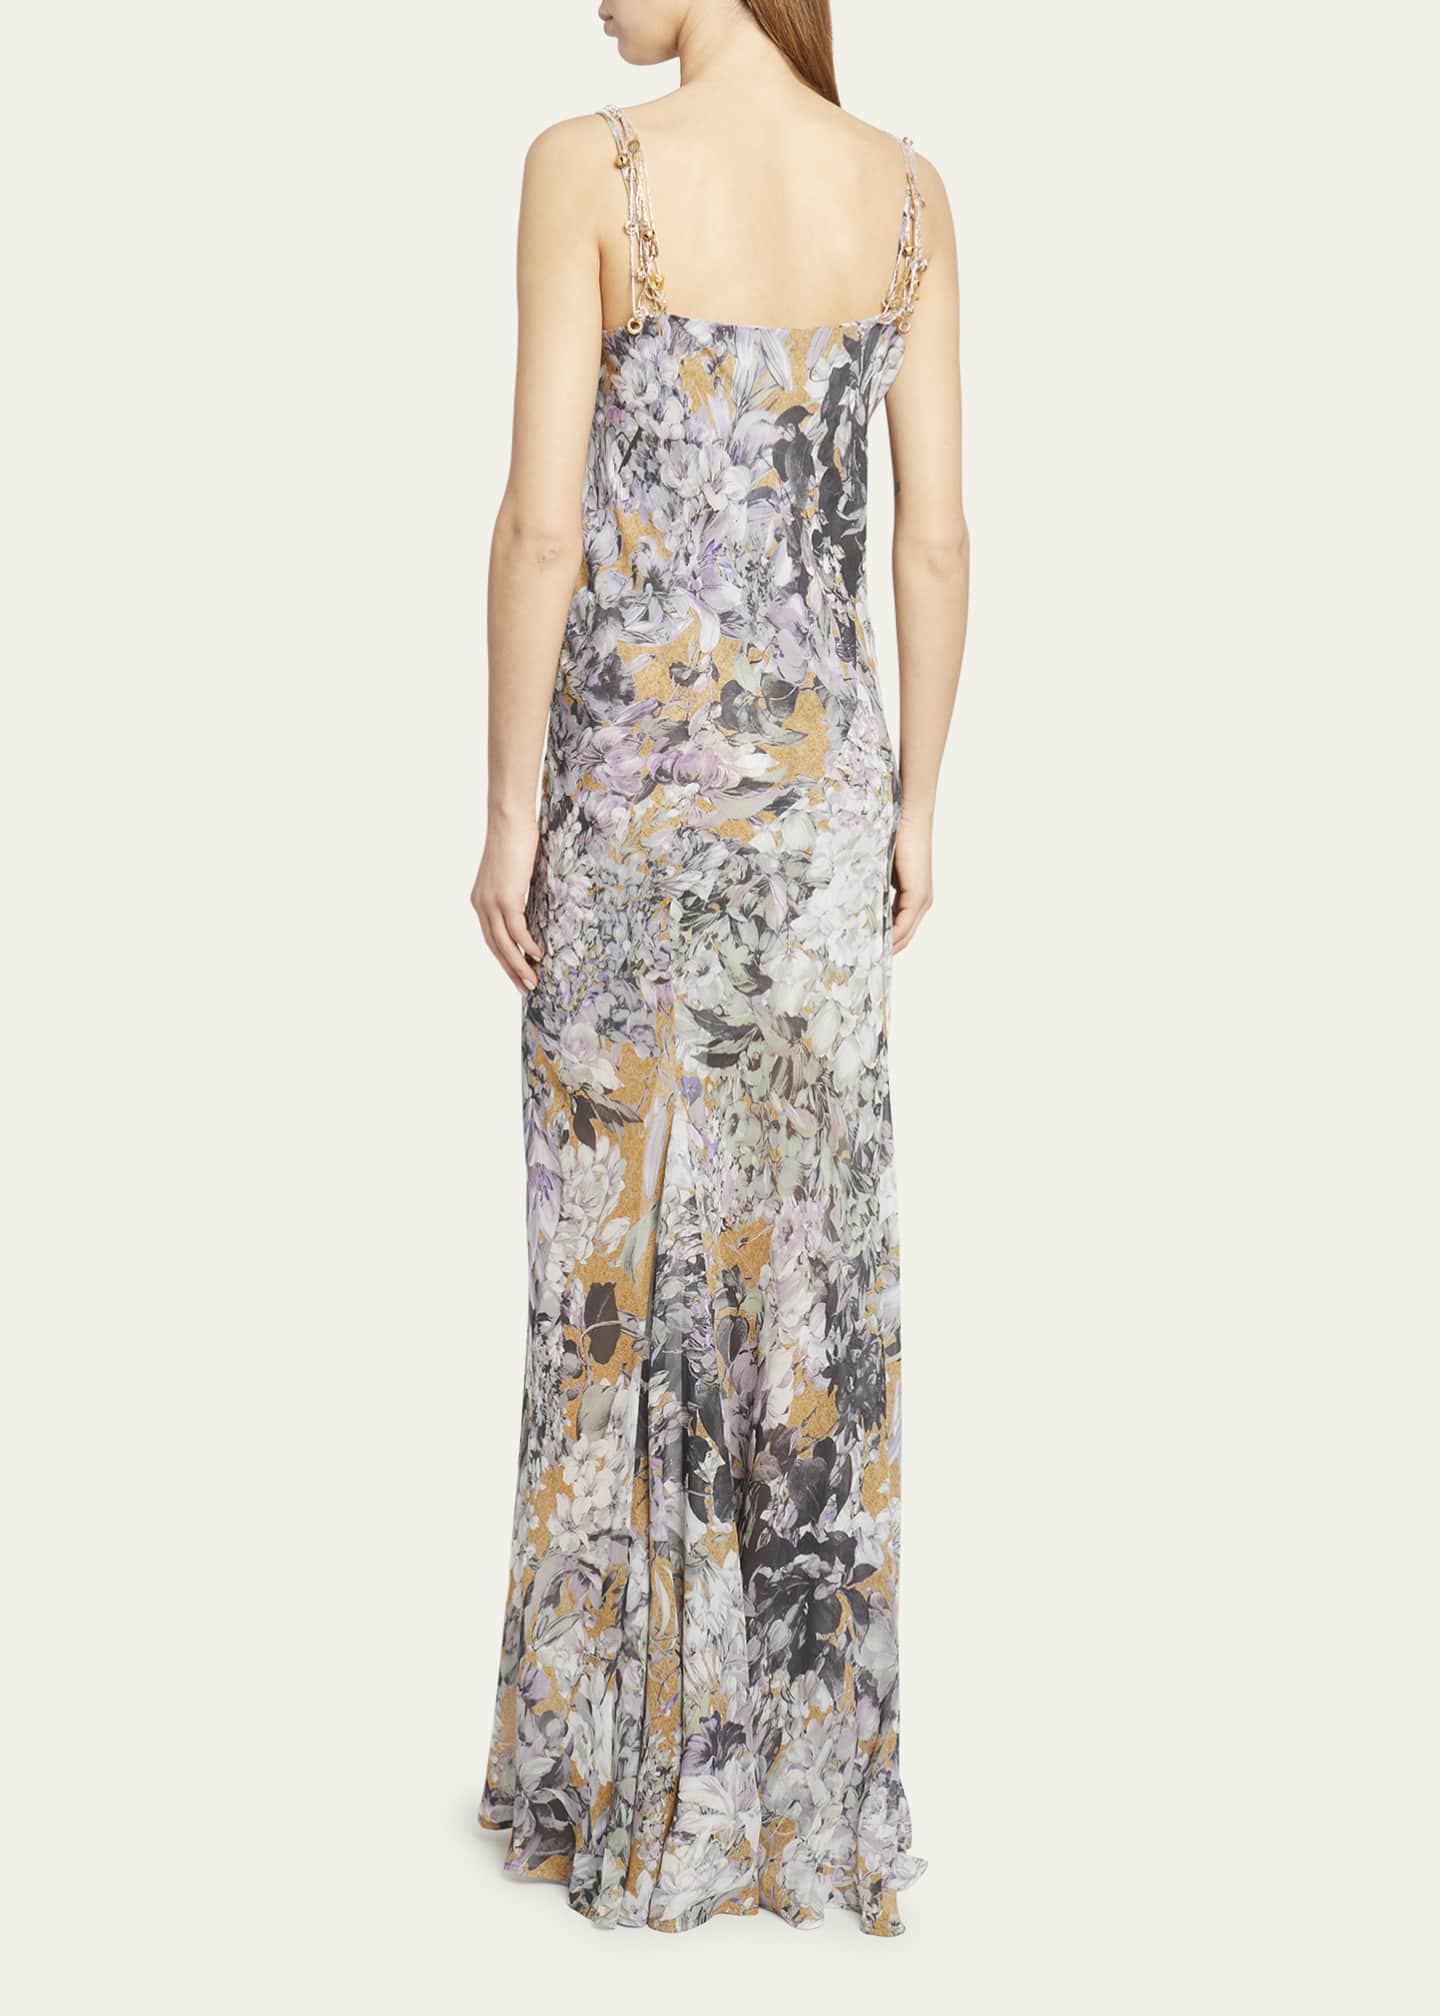 Dries Van Noten Deryl Floral Print Slip Dress with Beaded ...